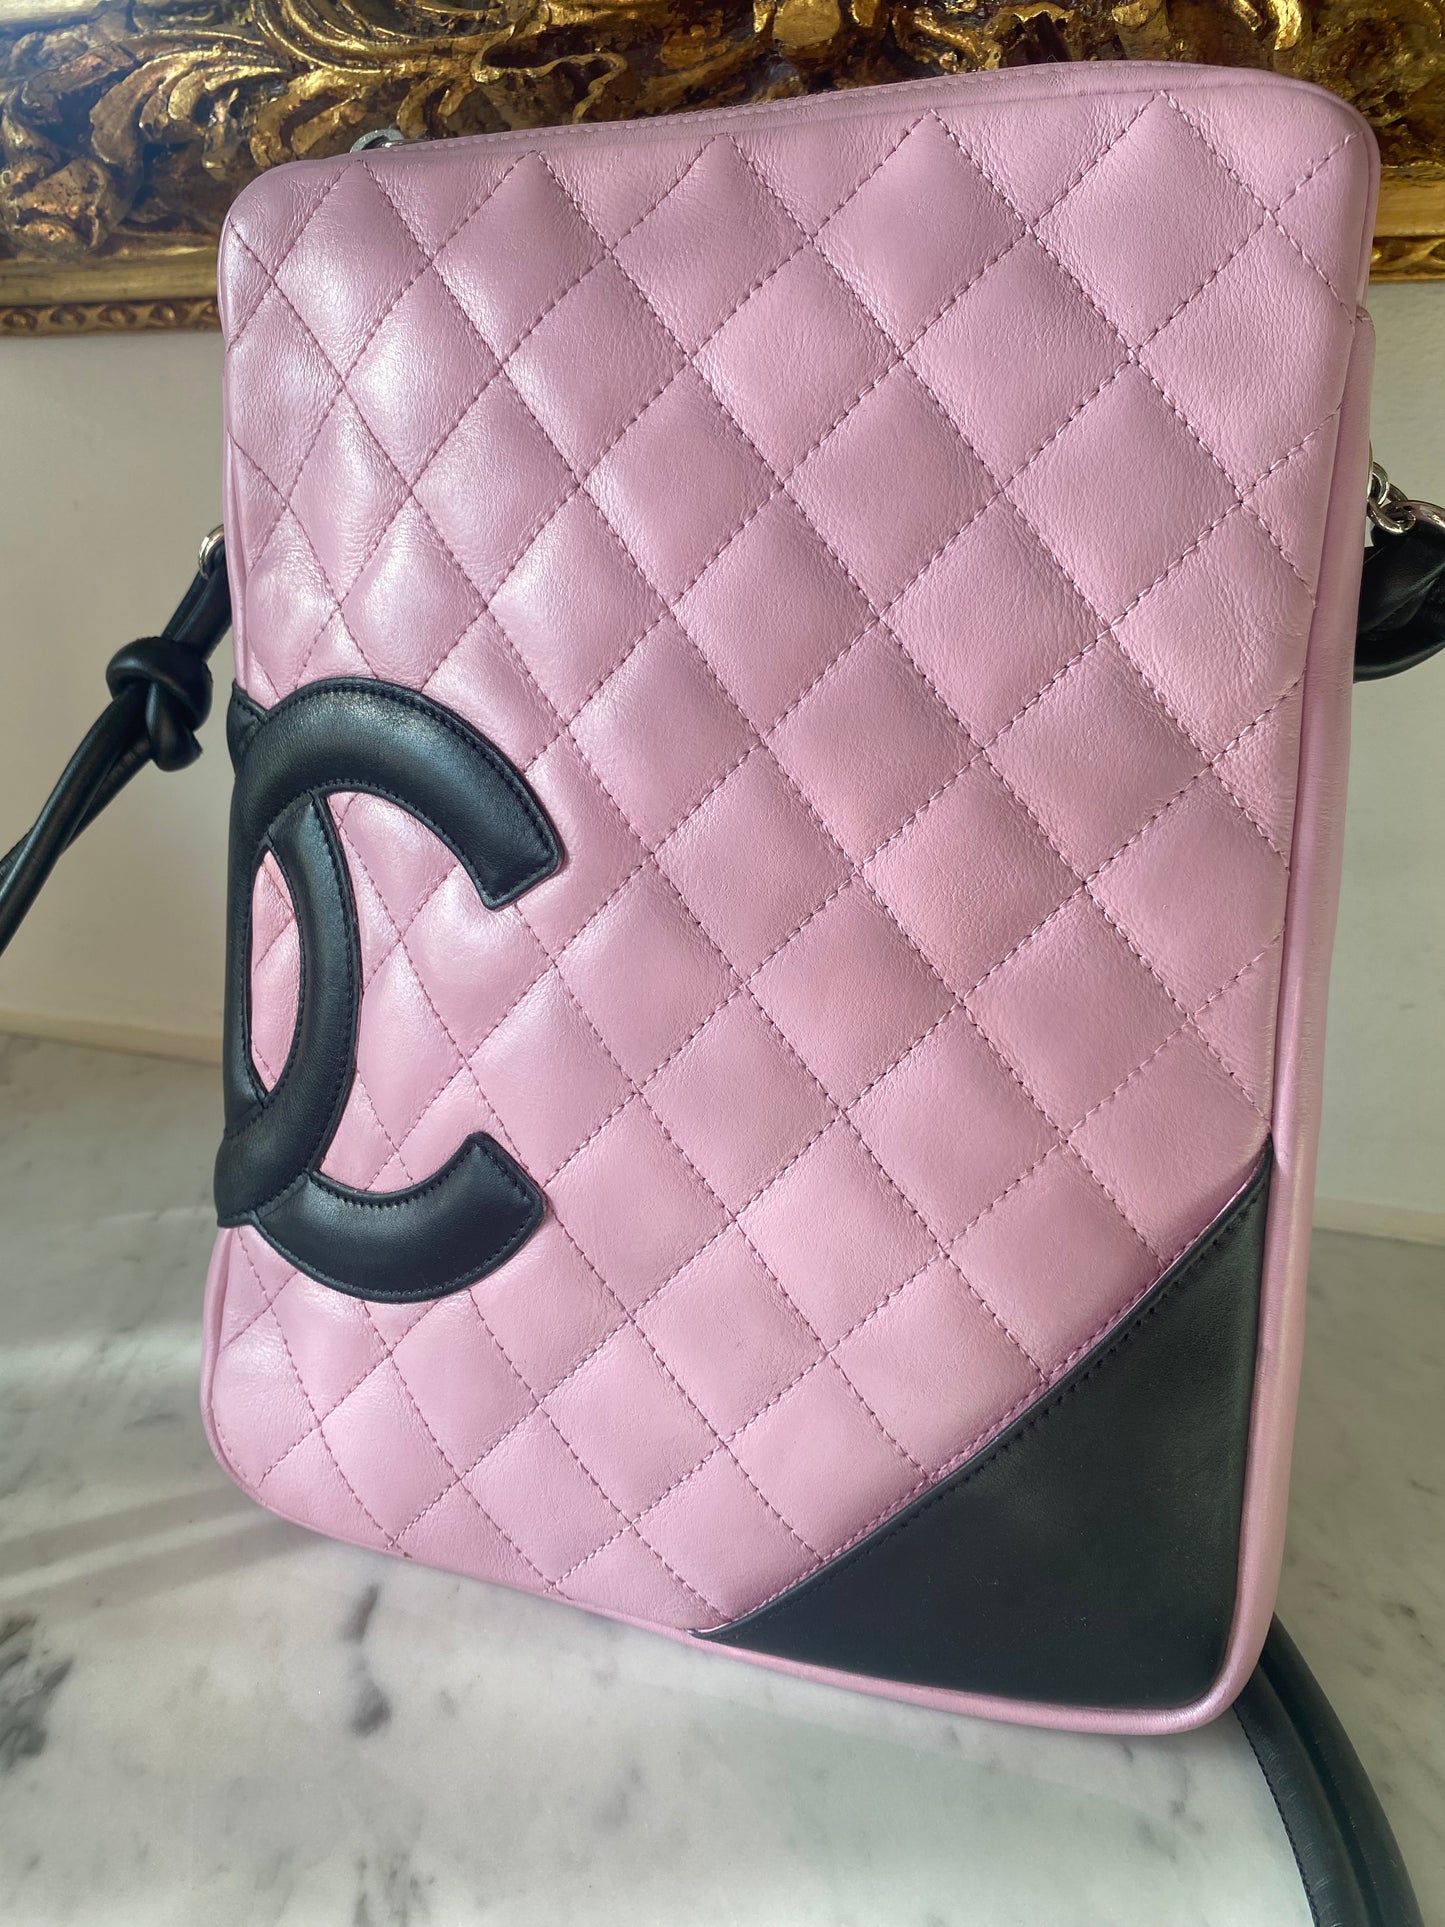 Chanel Cambon crossbody bag